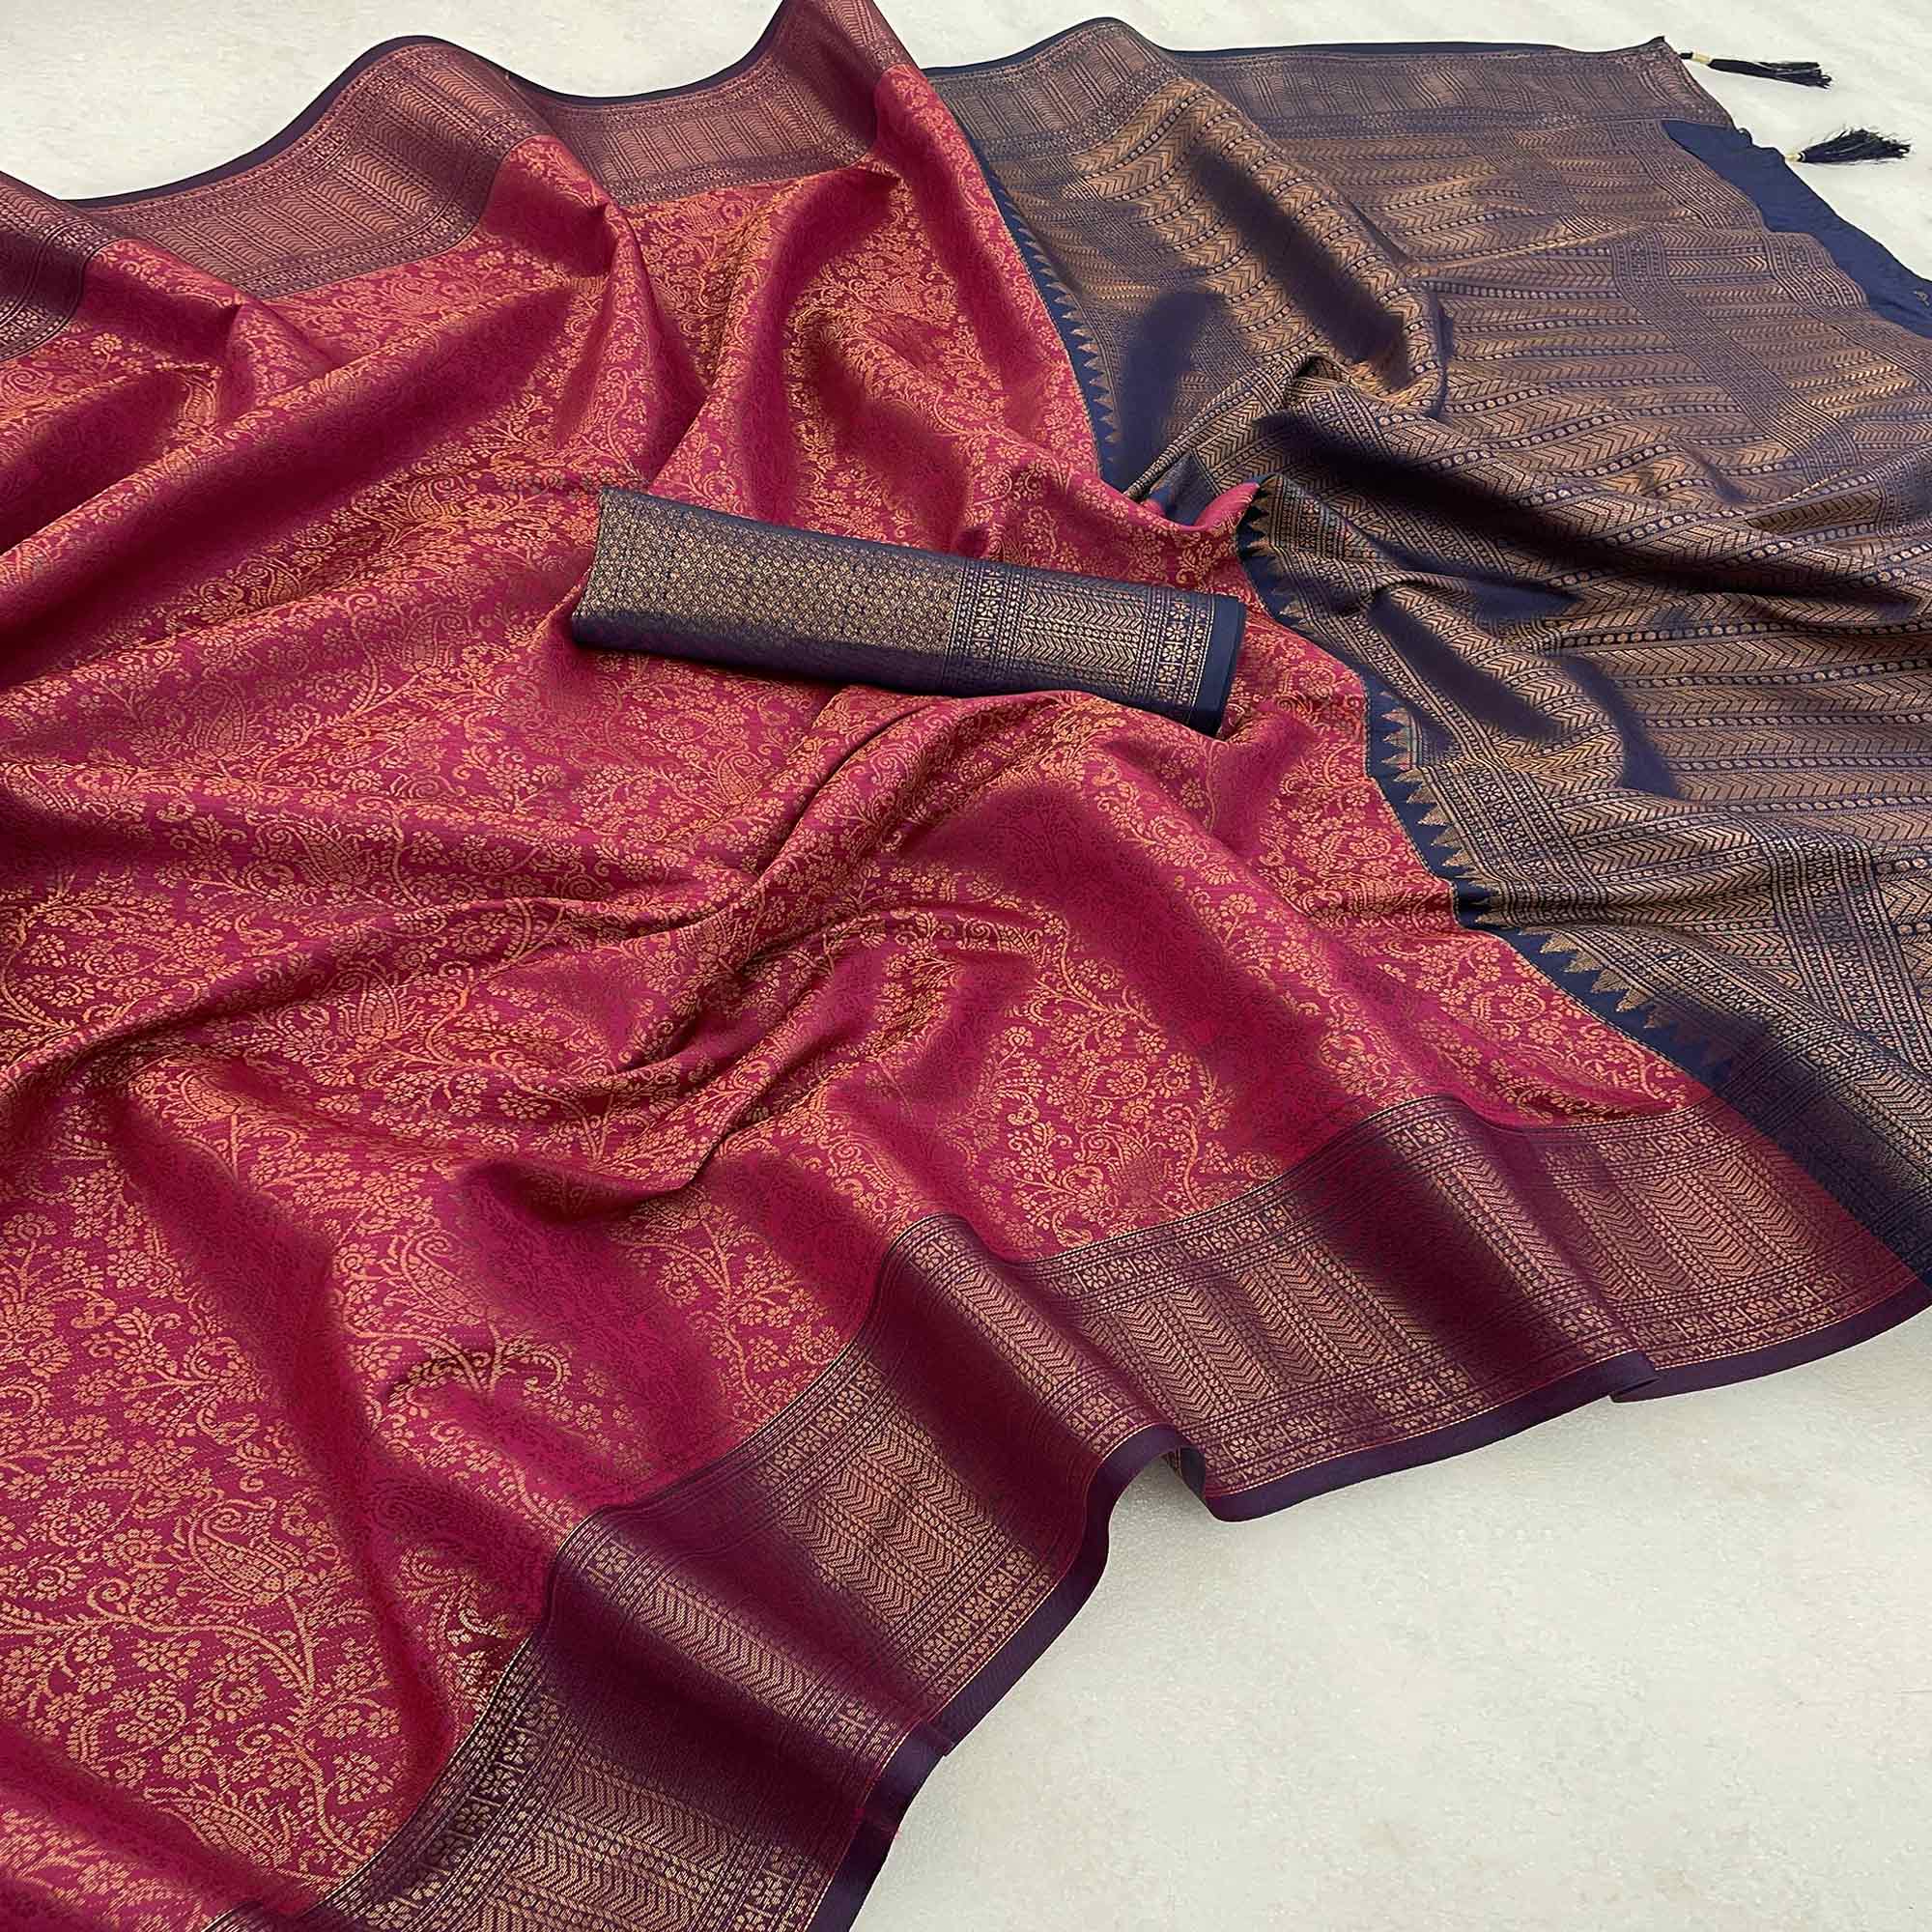 Magenta Woven Banarasi Silk Saree With Tassels